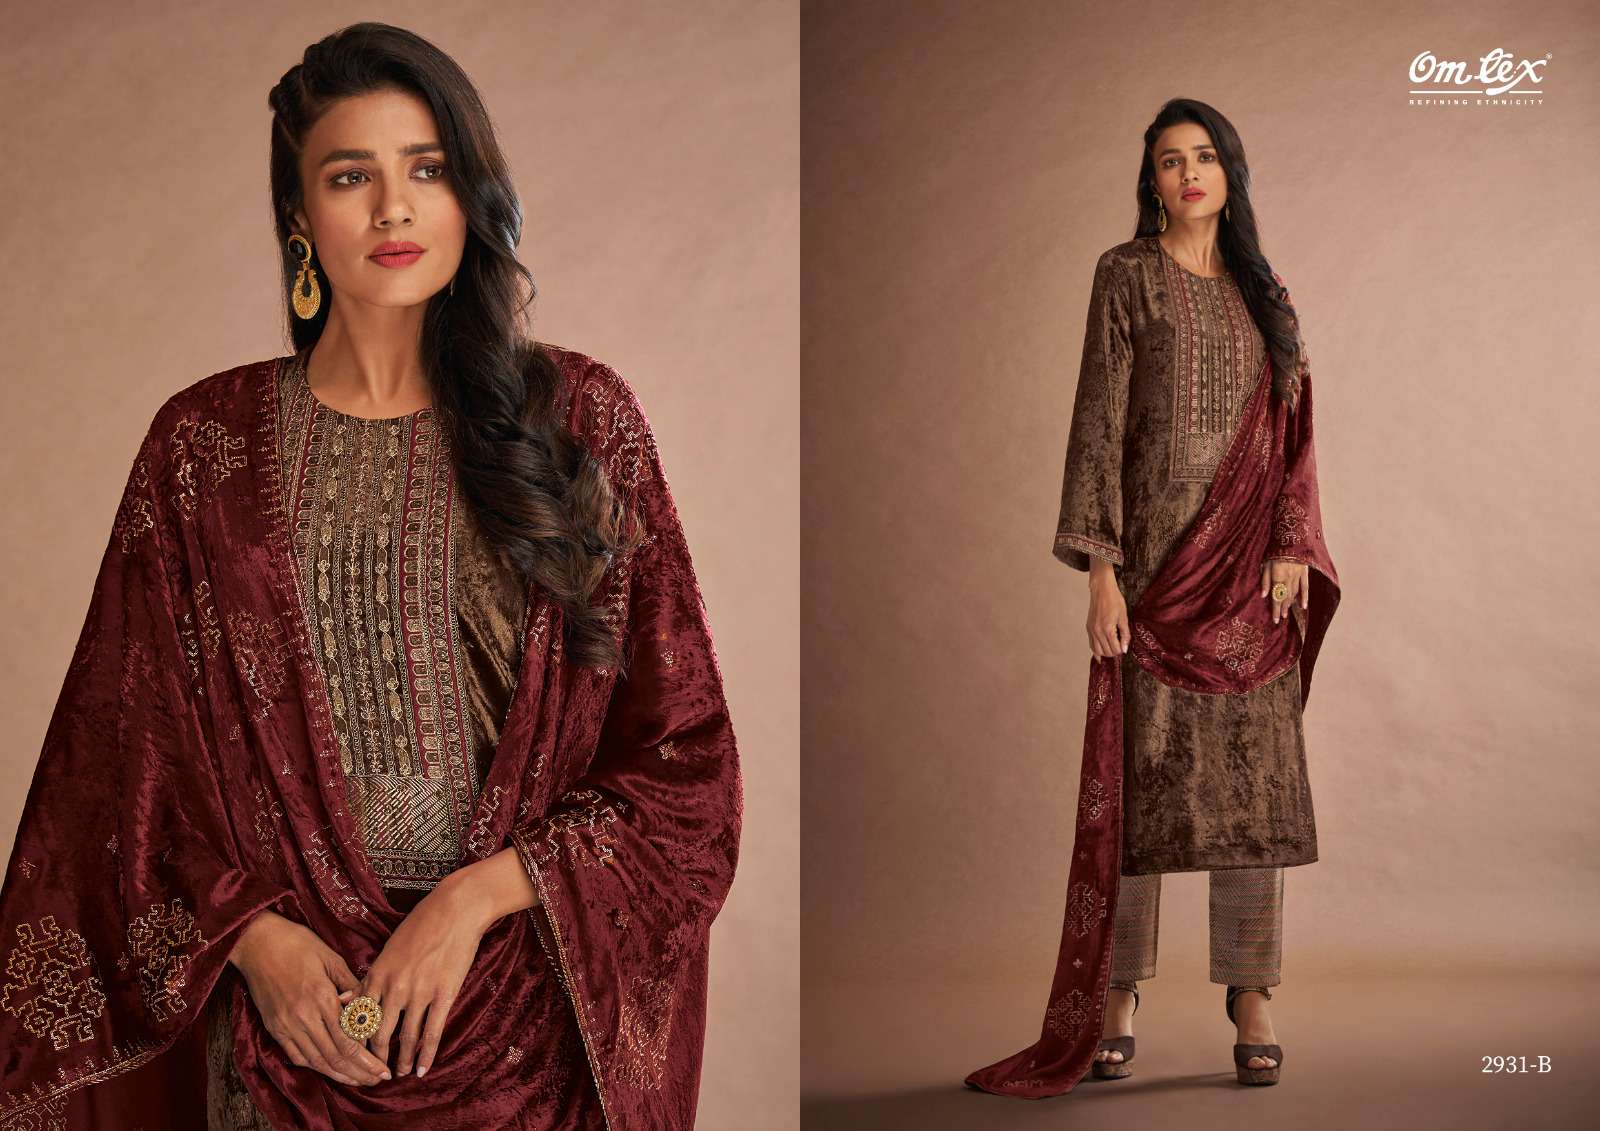 om tex vaidehi 2931 colour series latest designer wedding wear muslin salwar kameez wholesale price surat